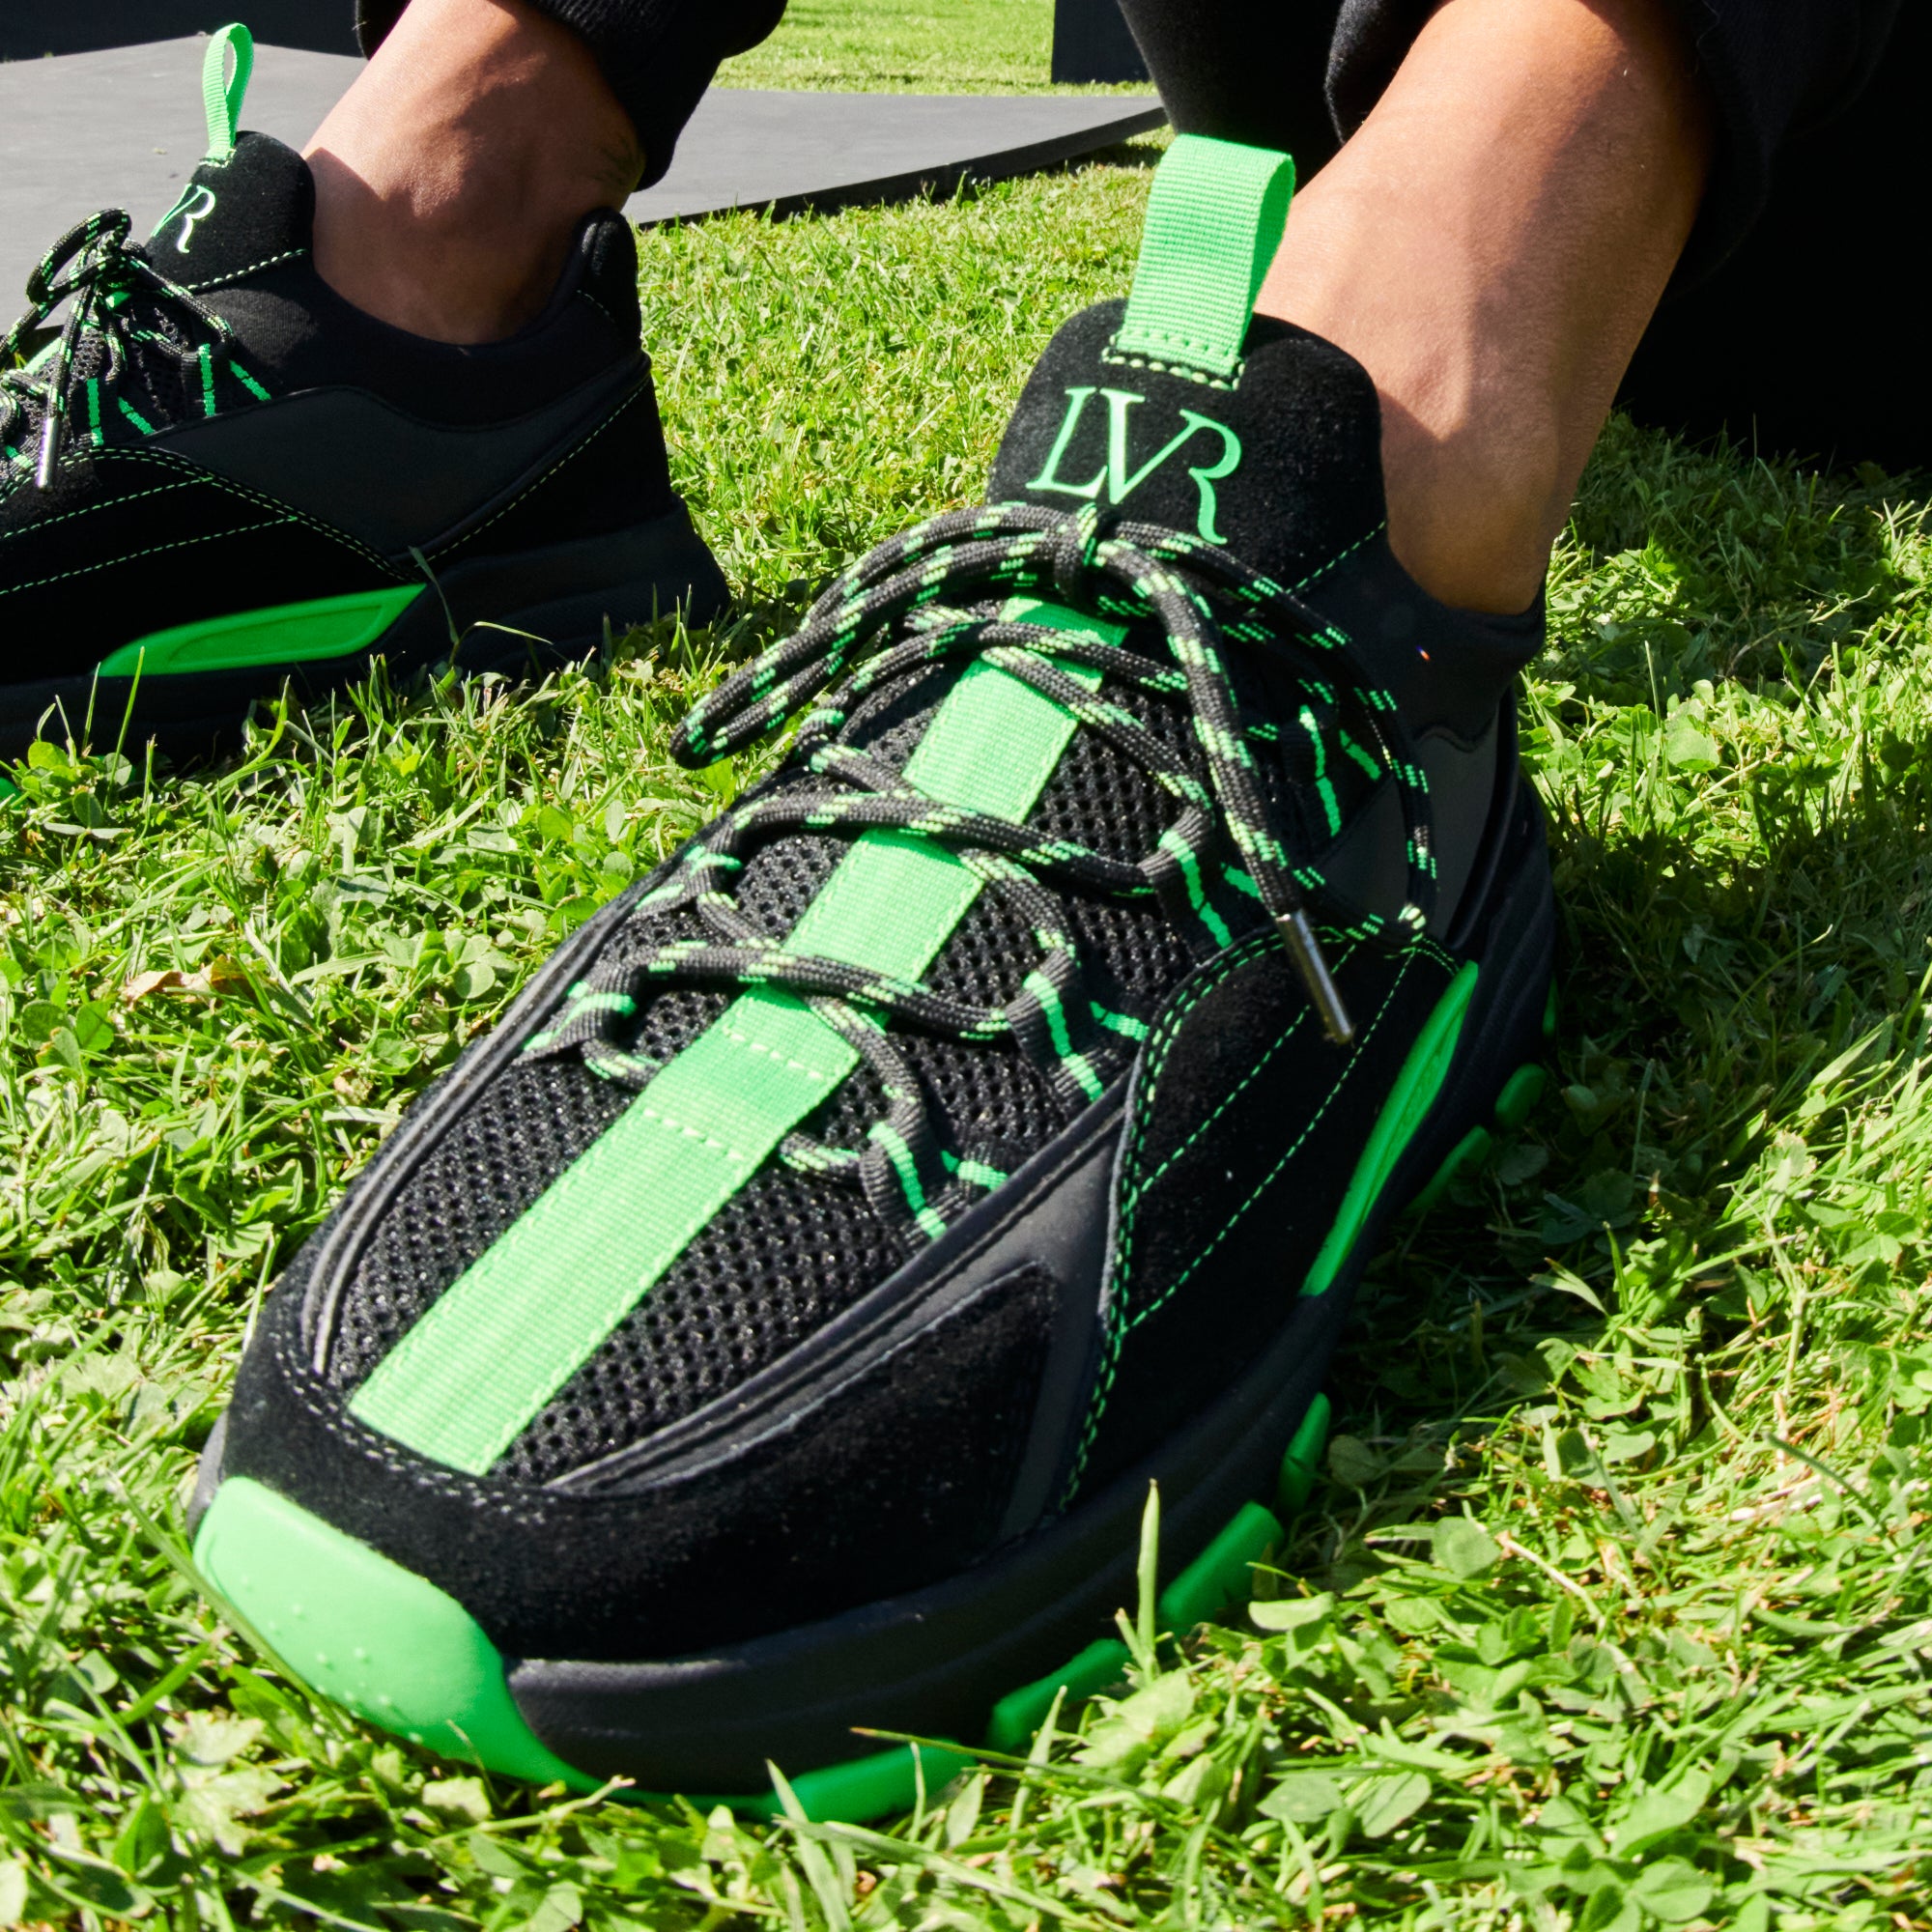 LAVAIR Creator EVO Sneaker Lifestyle On Foot Close-Up.